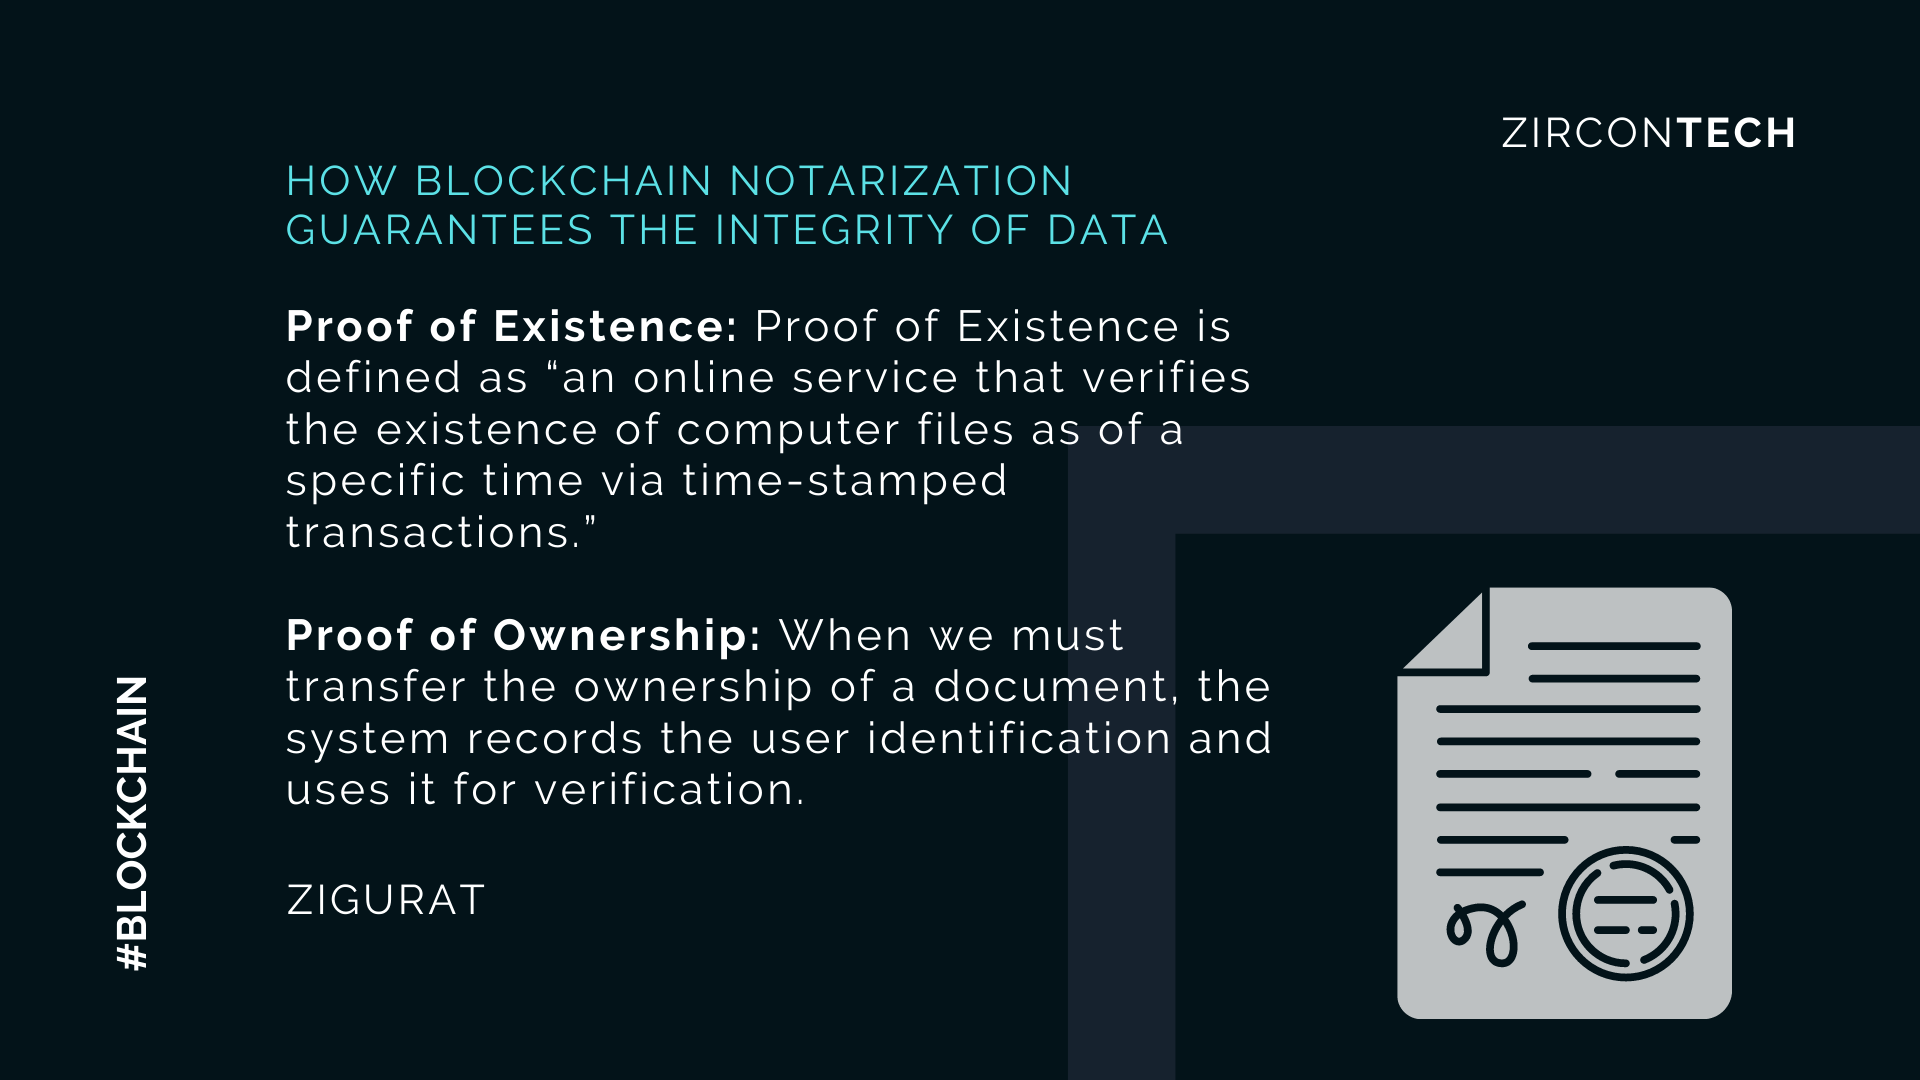 How Blockchain Notarization guarantees the integrity of data